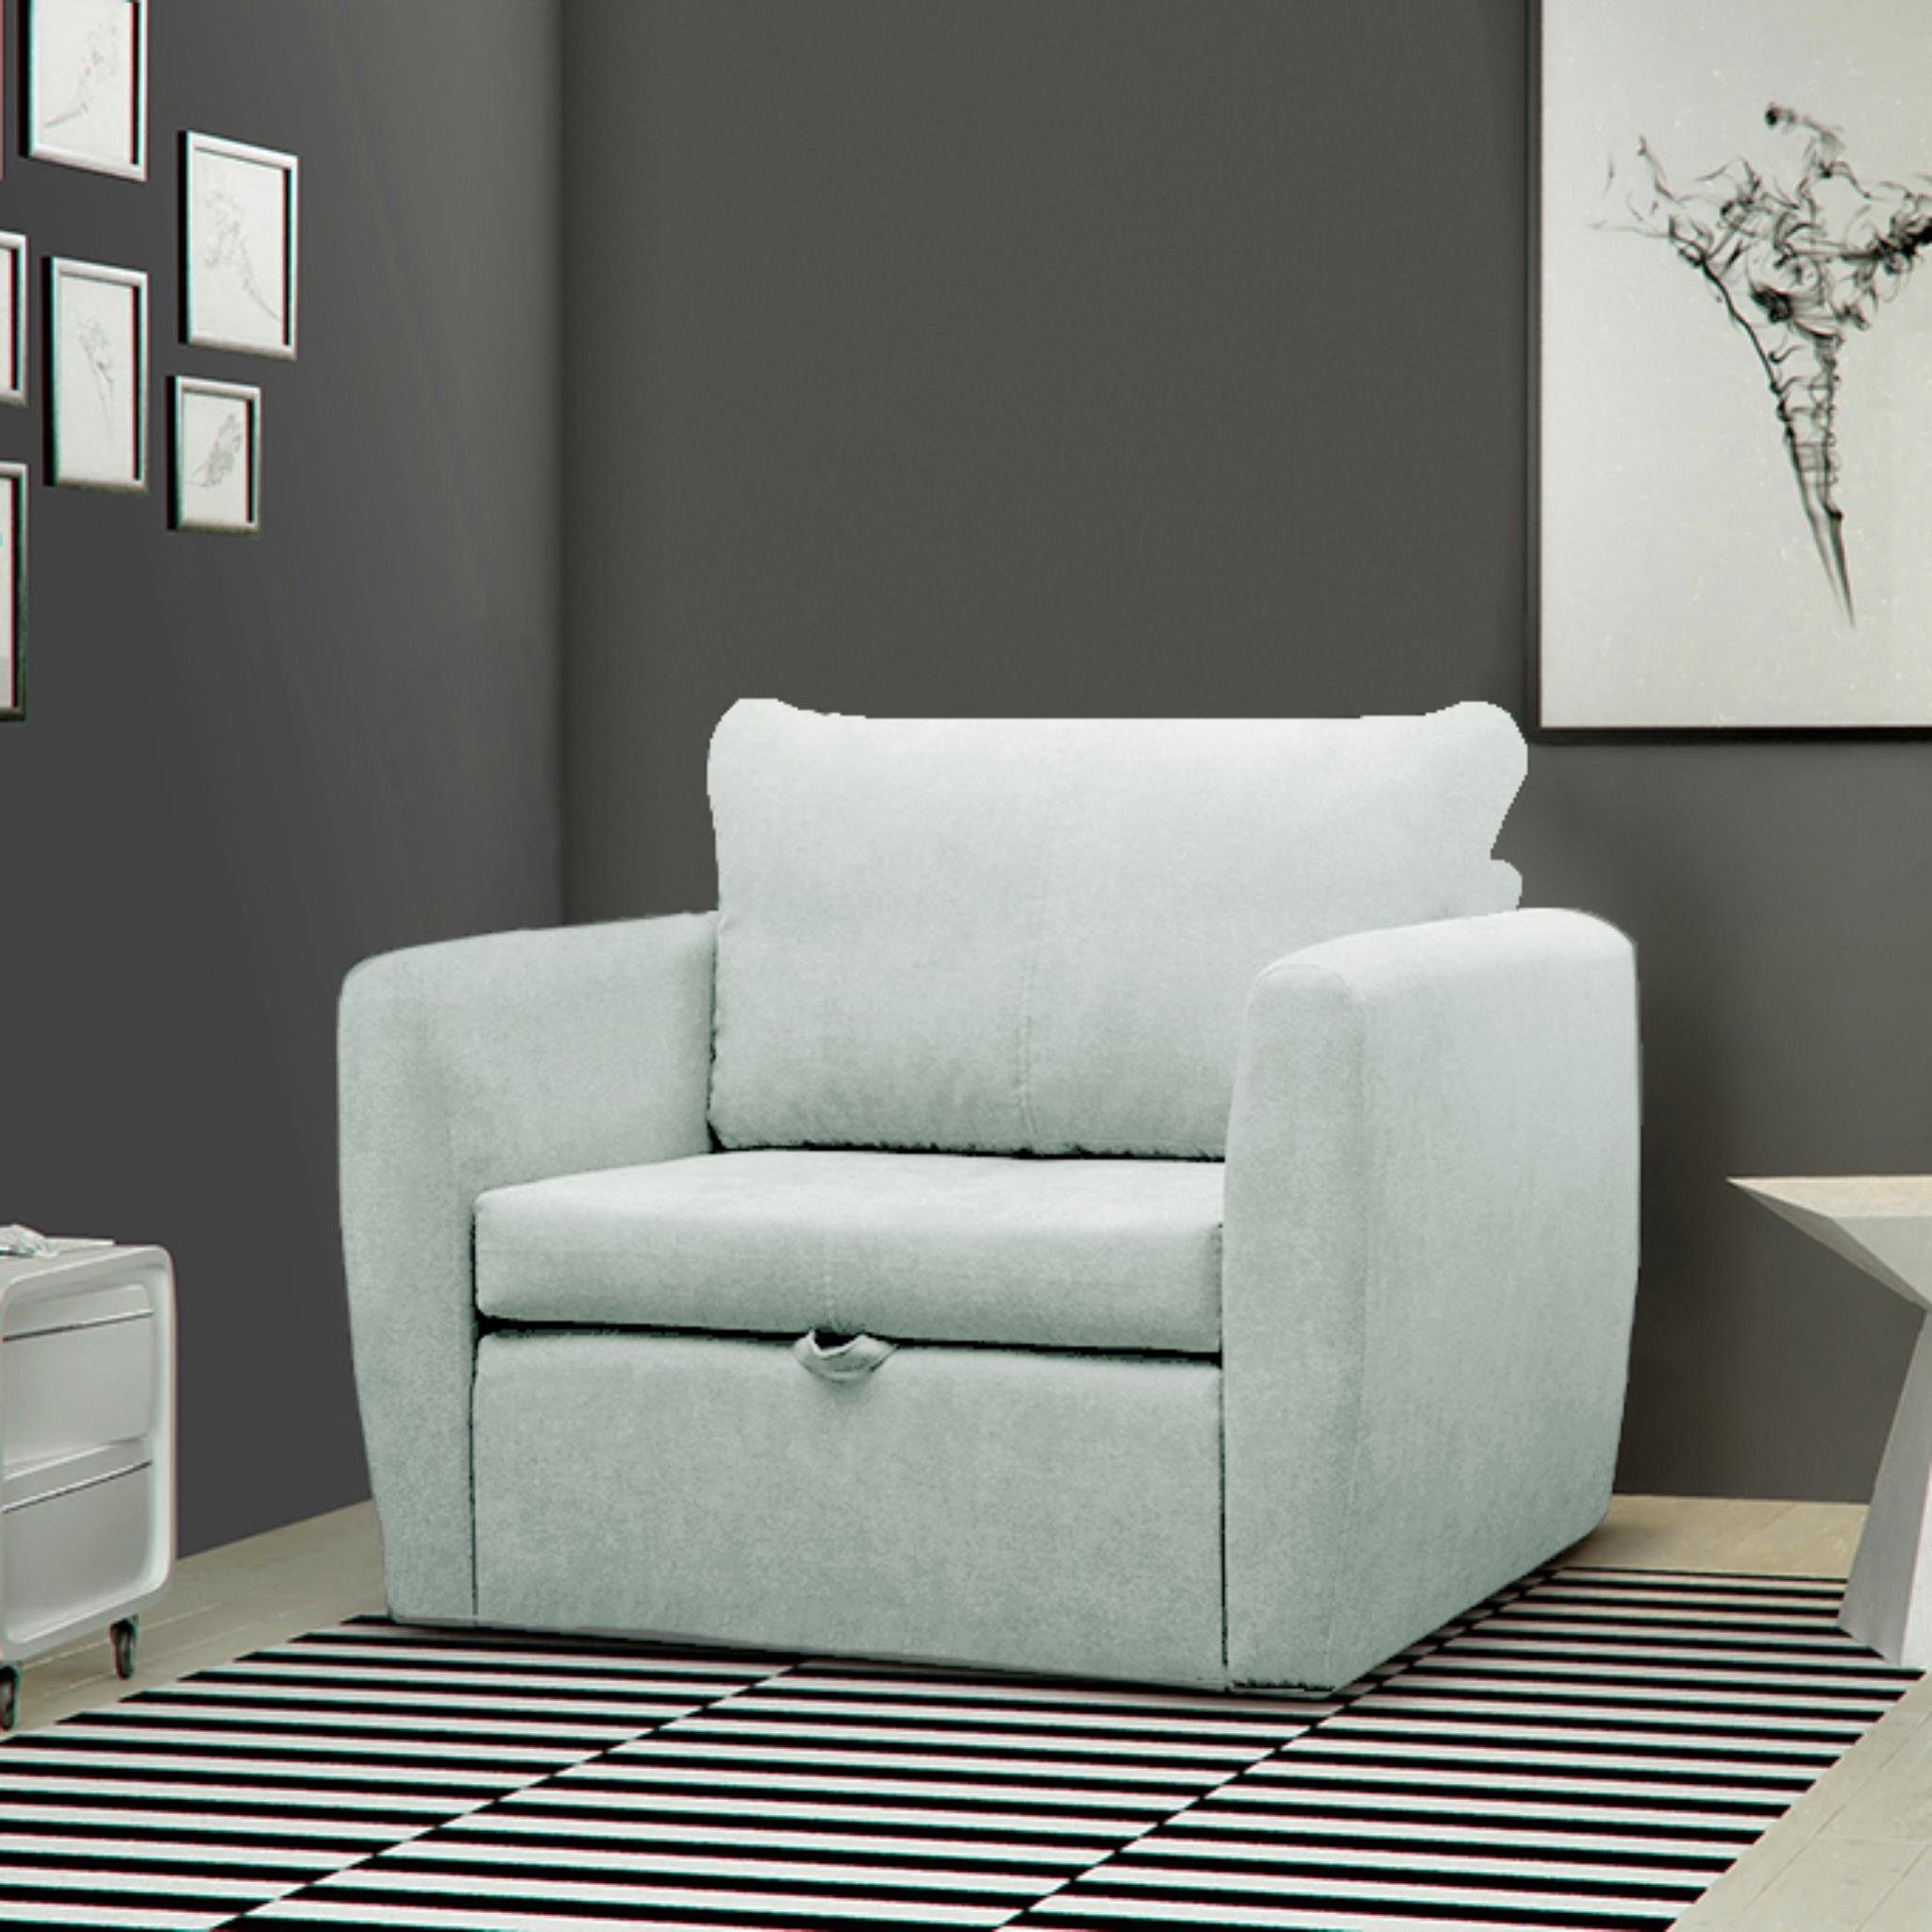 Beautysofa Relaxsessel Kamel (Modern 1-Sitzer Sofa, Wohnzimmersessel), mit Schlaffunktion, Bettkasten, Polstersessel Mint (alfa 04)